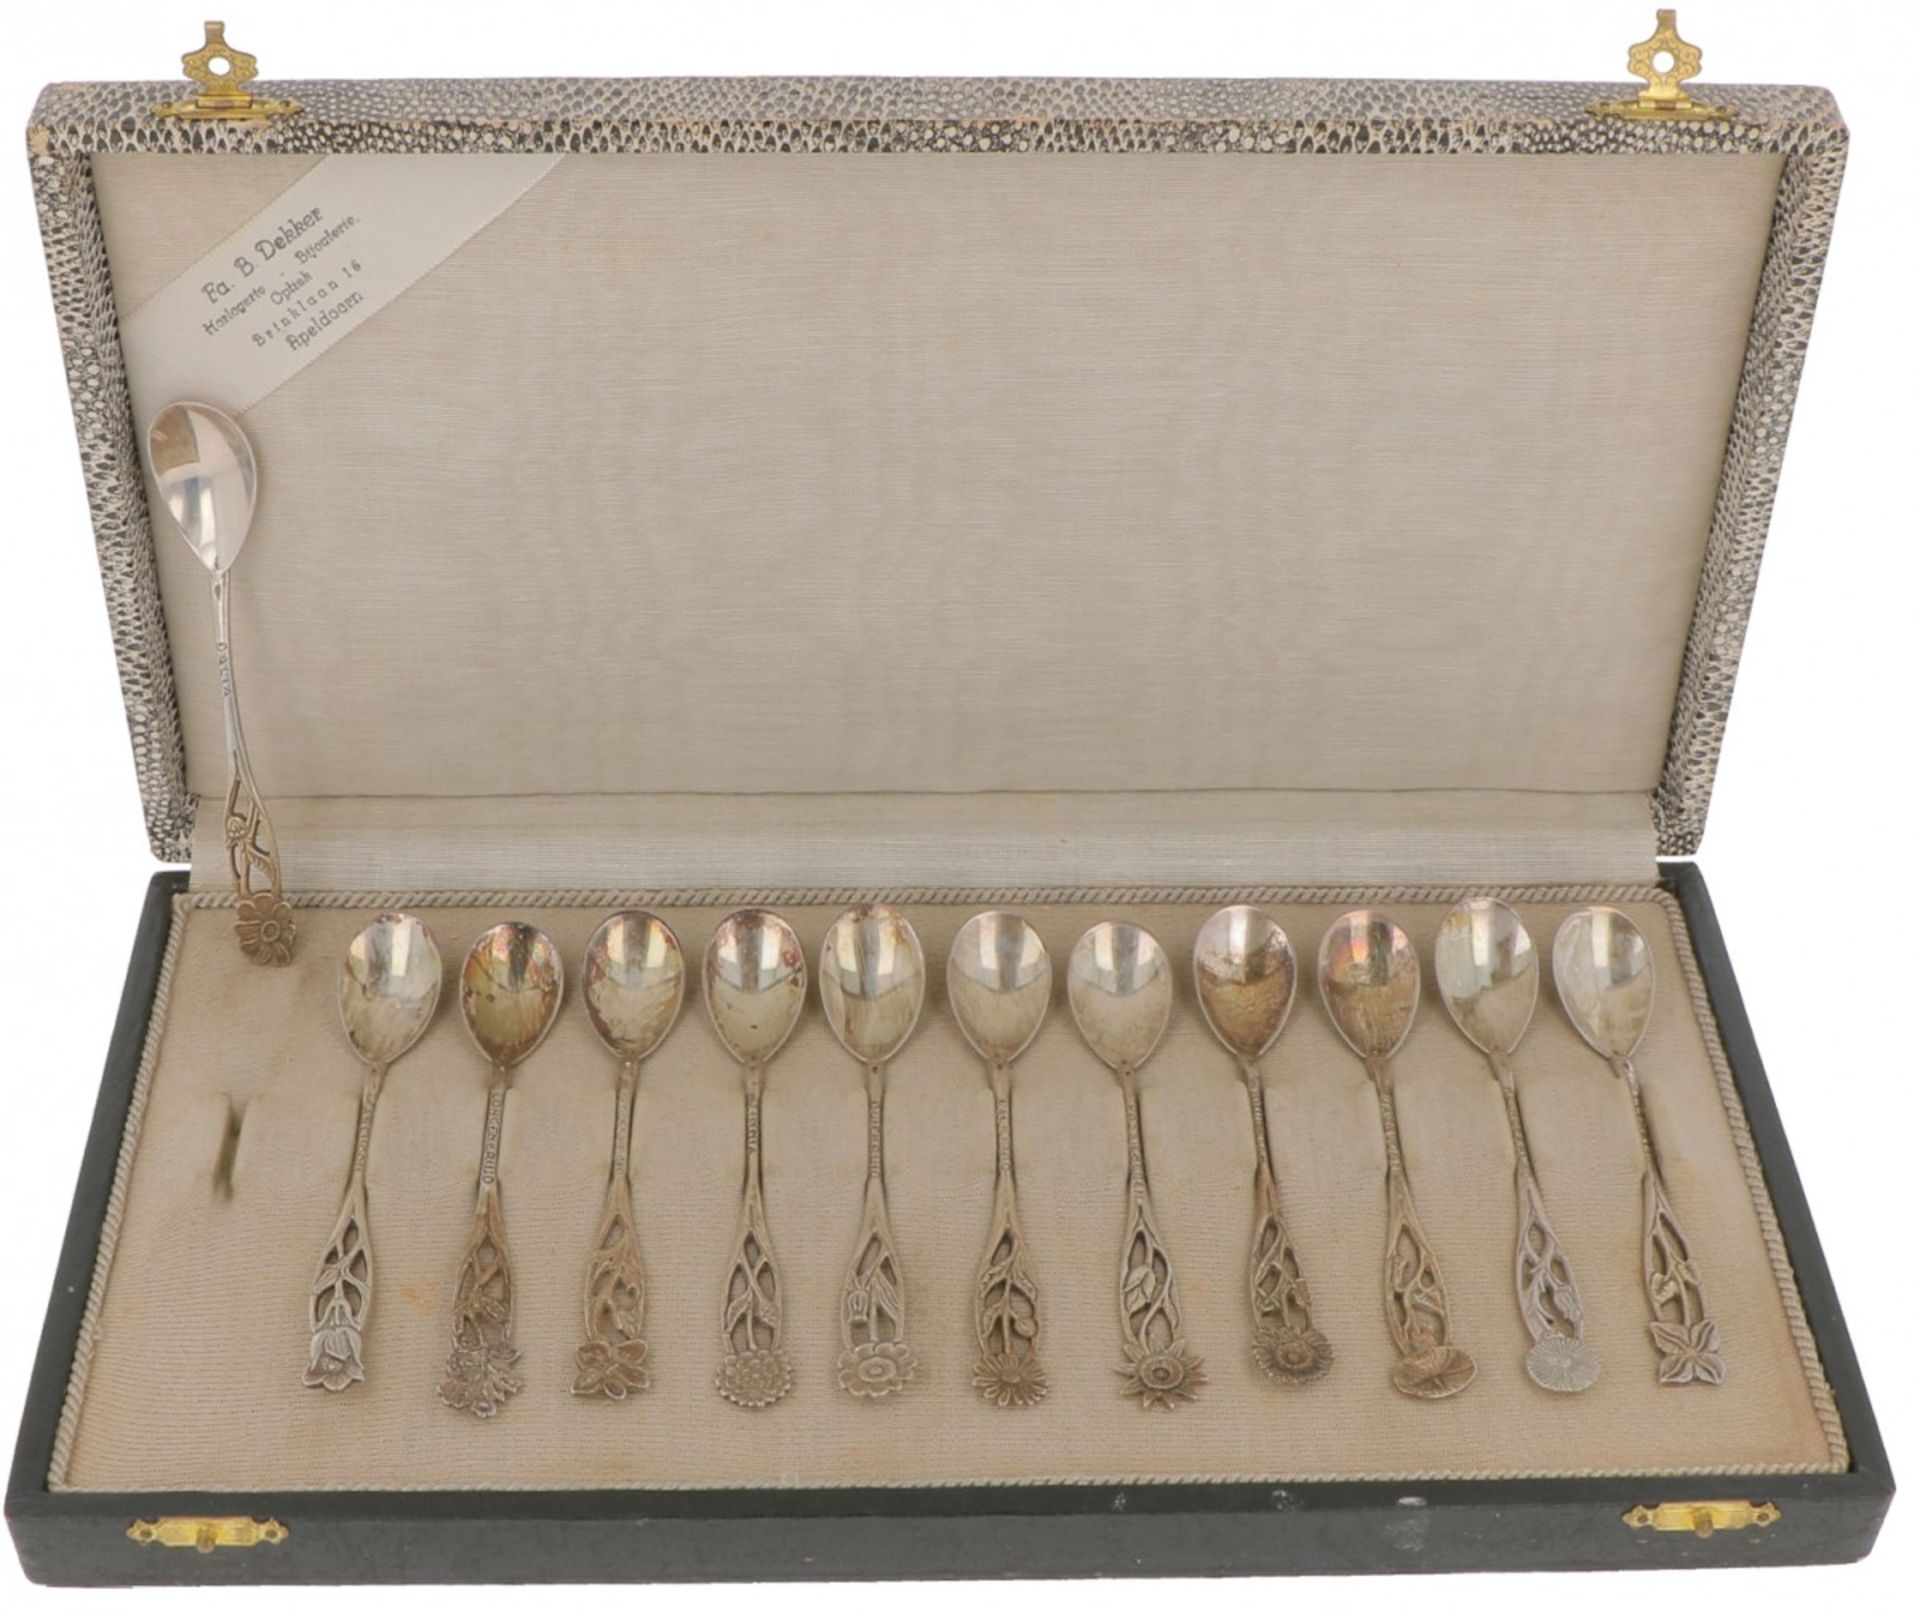 12) Piece set of teaspoons silver.